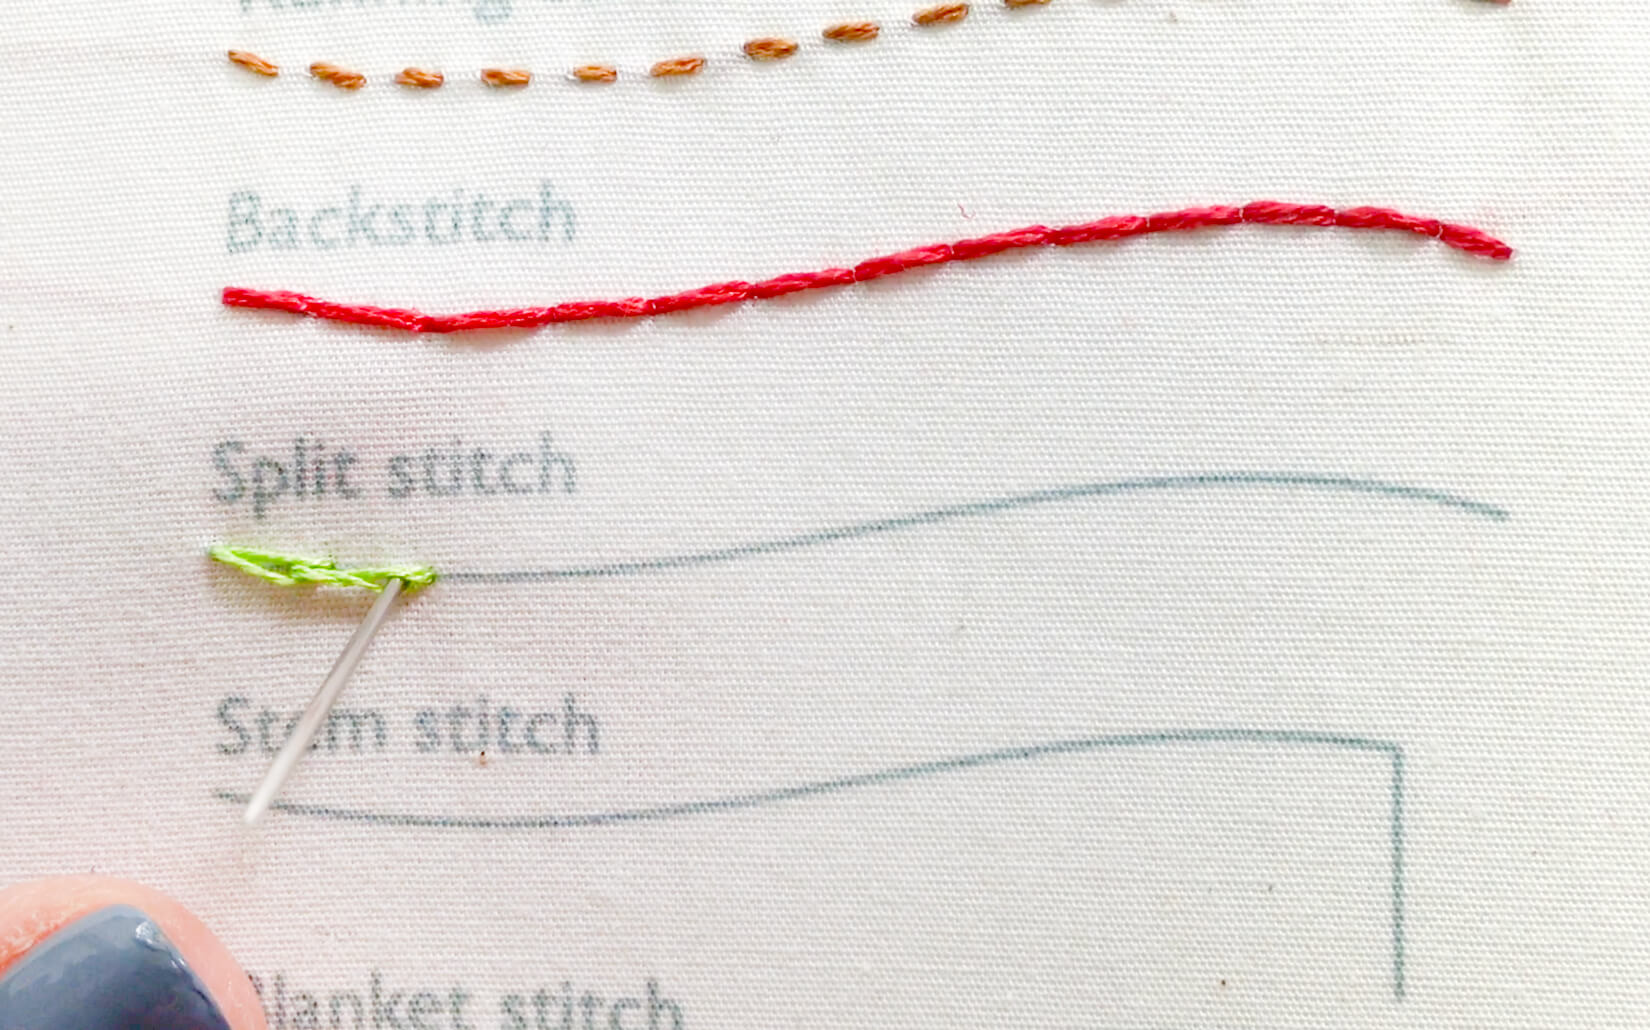 Image of stitching the split stitch